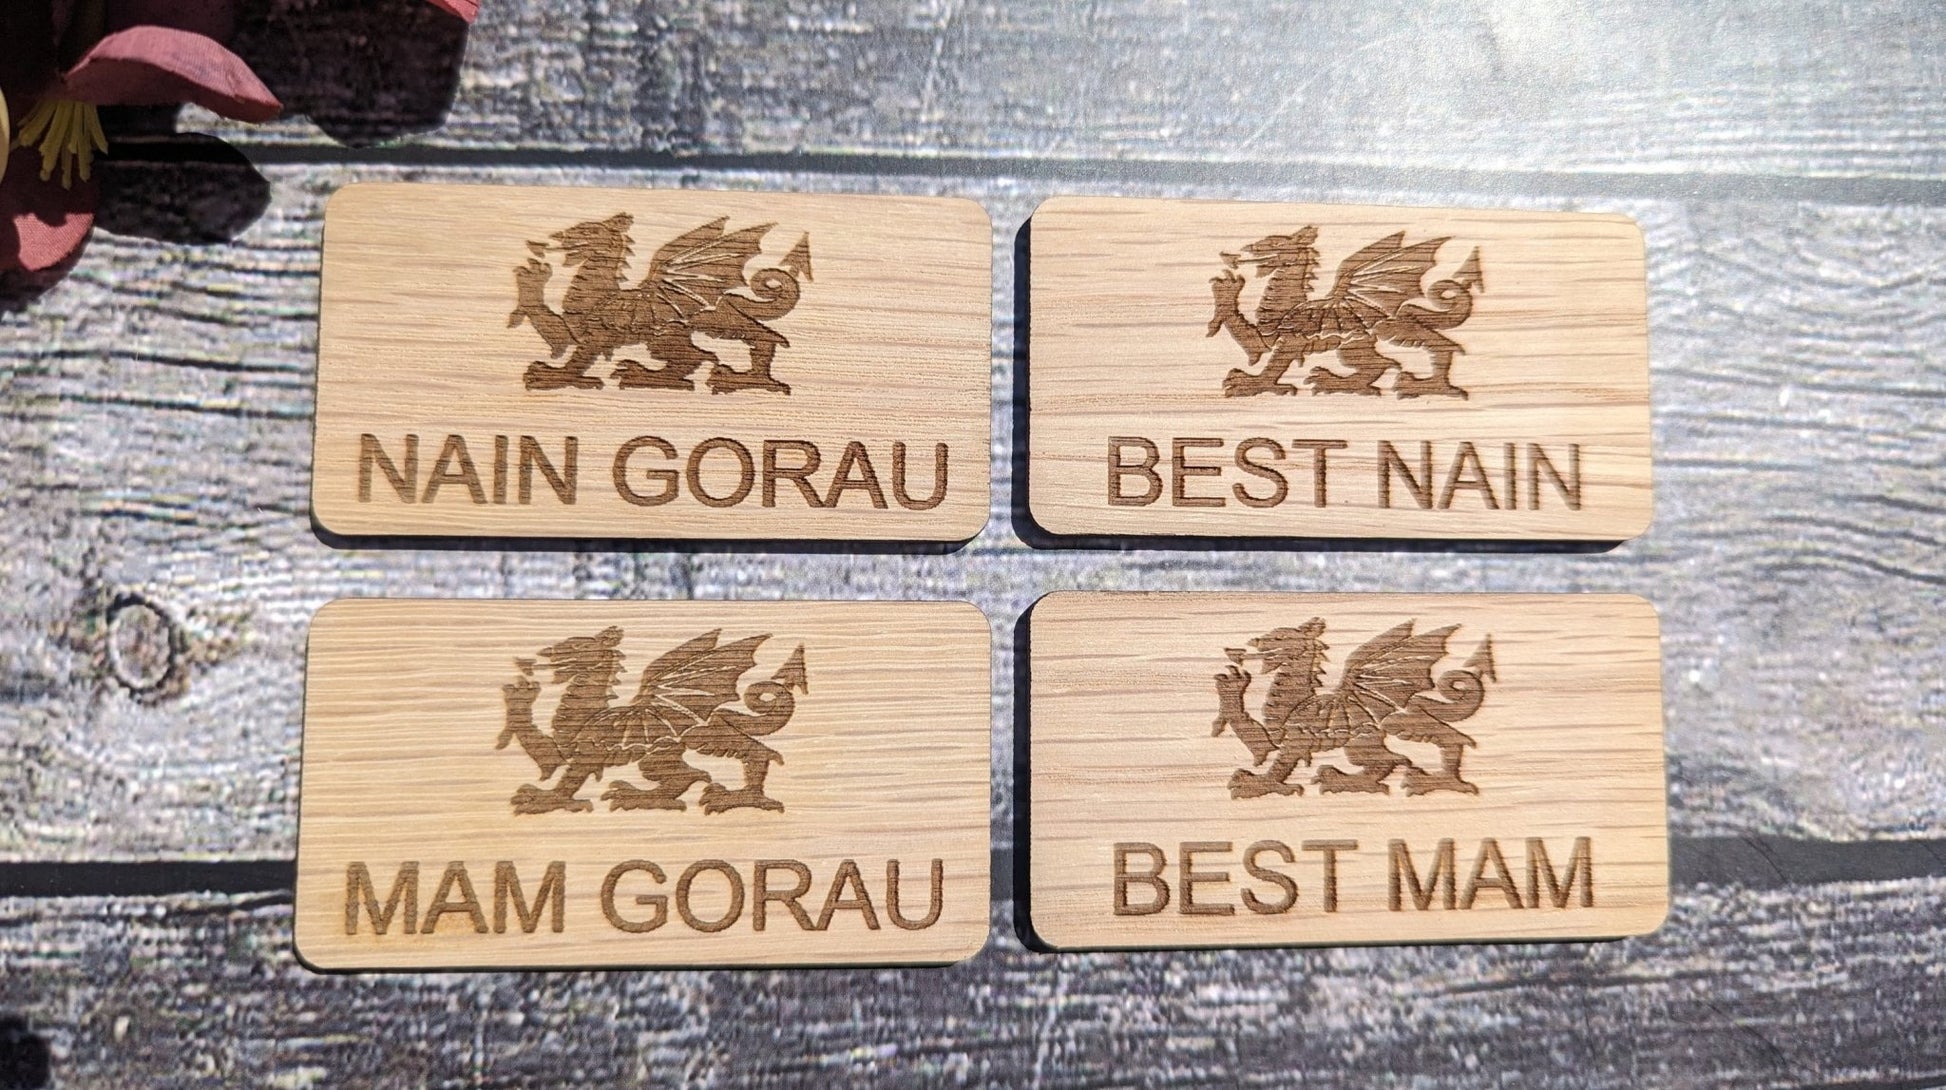 Fun Welsh Wooden Name Badges | Best Mam, Best Nain, Mam Gorau, Nain Gorau - CherryGroveCraft